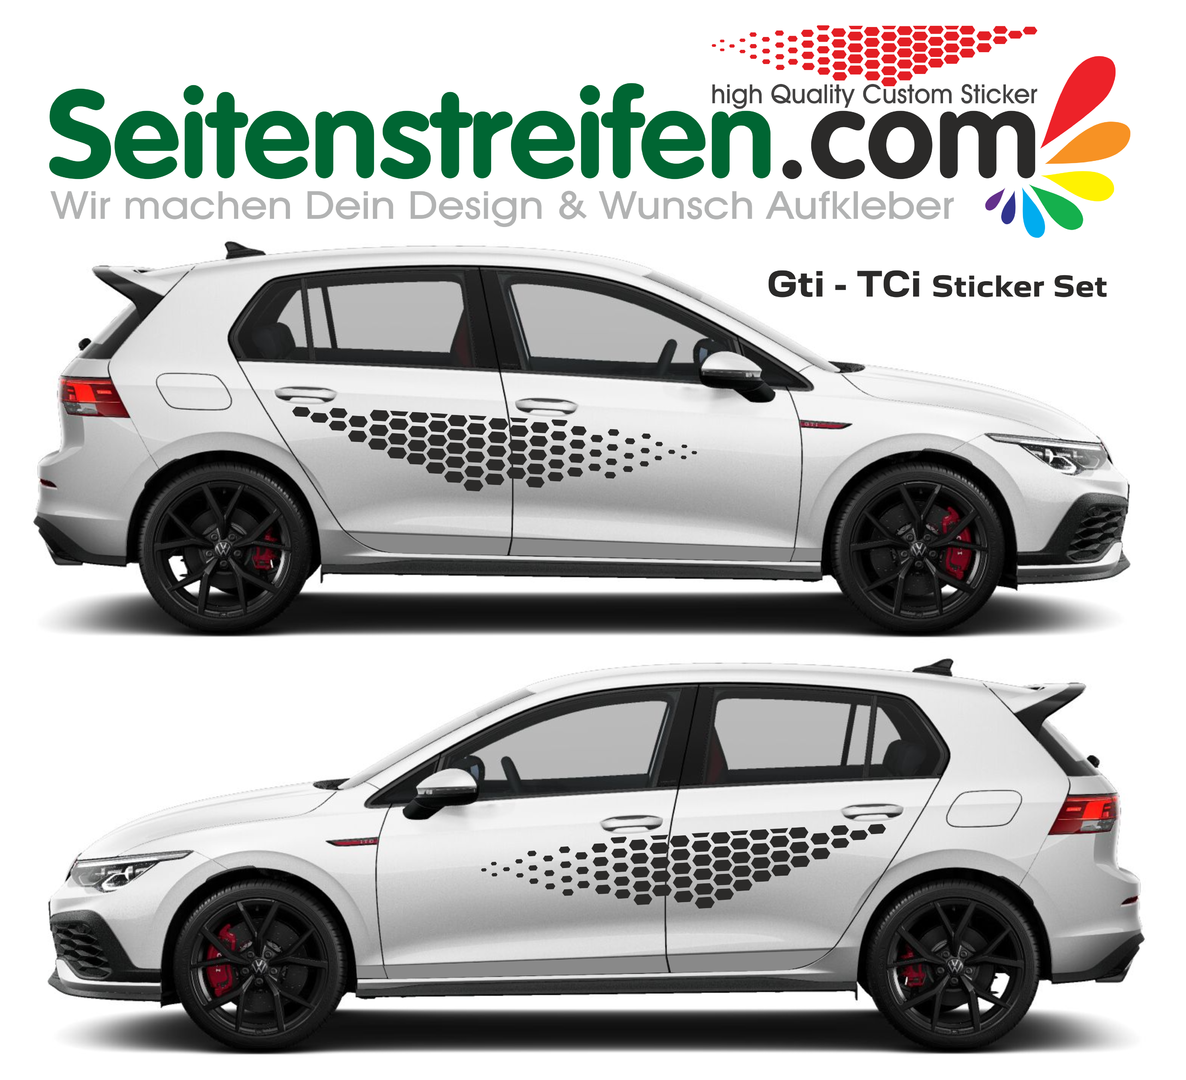 VW Golf 8 GTi TCi - Side Stripes Graphics Decals Sticker Kit